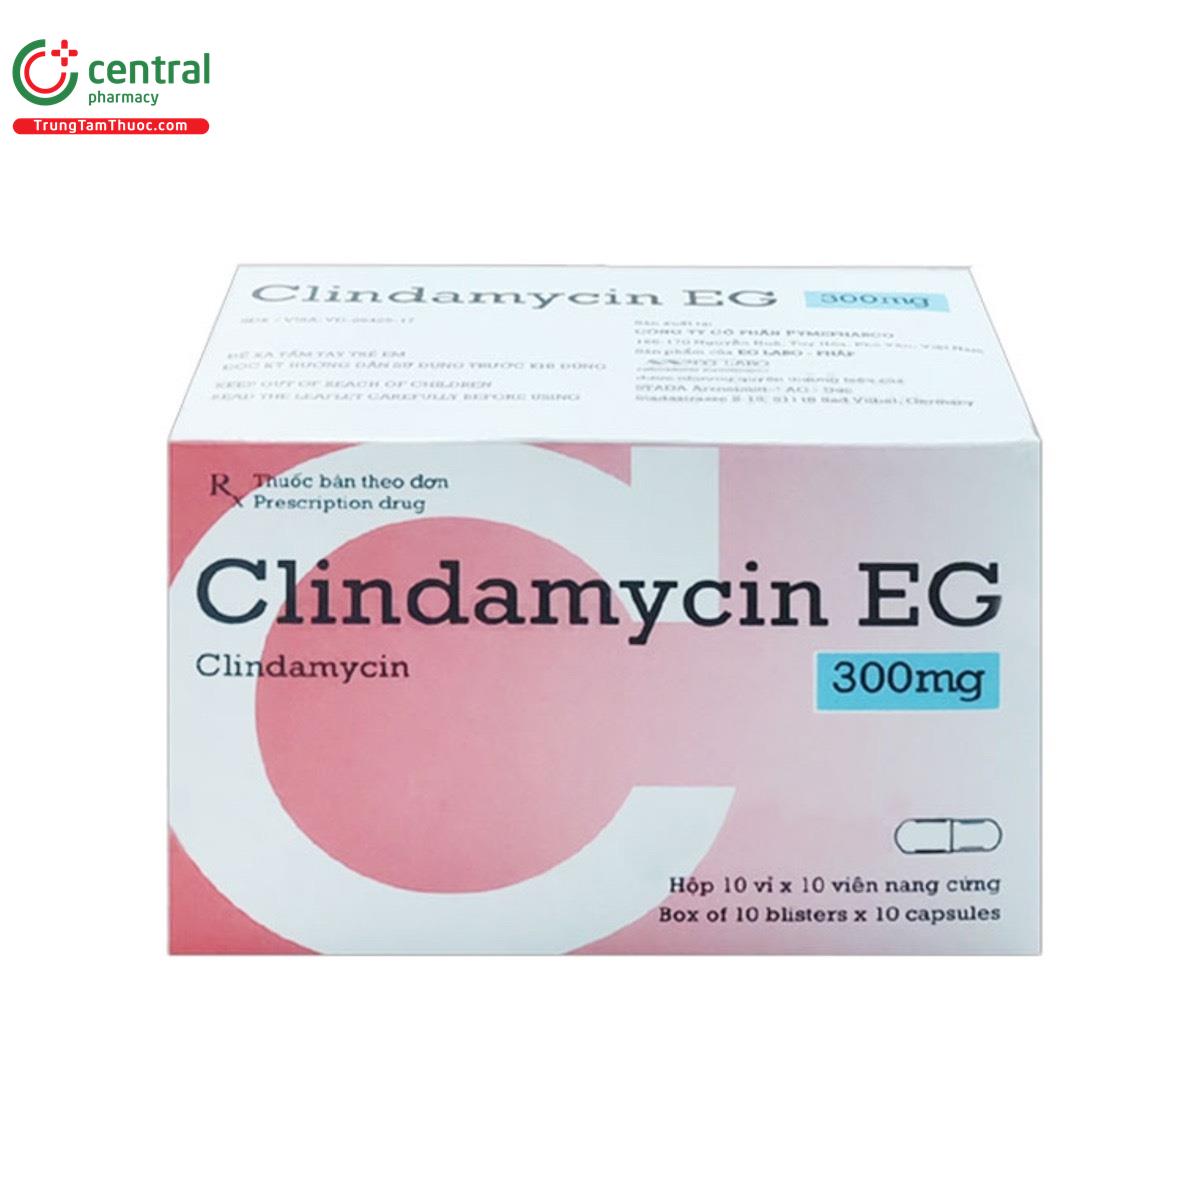 clindamycin eg 300mg 5 A0668